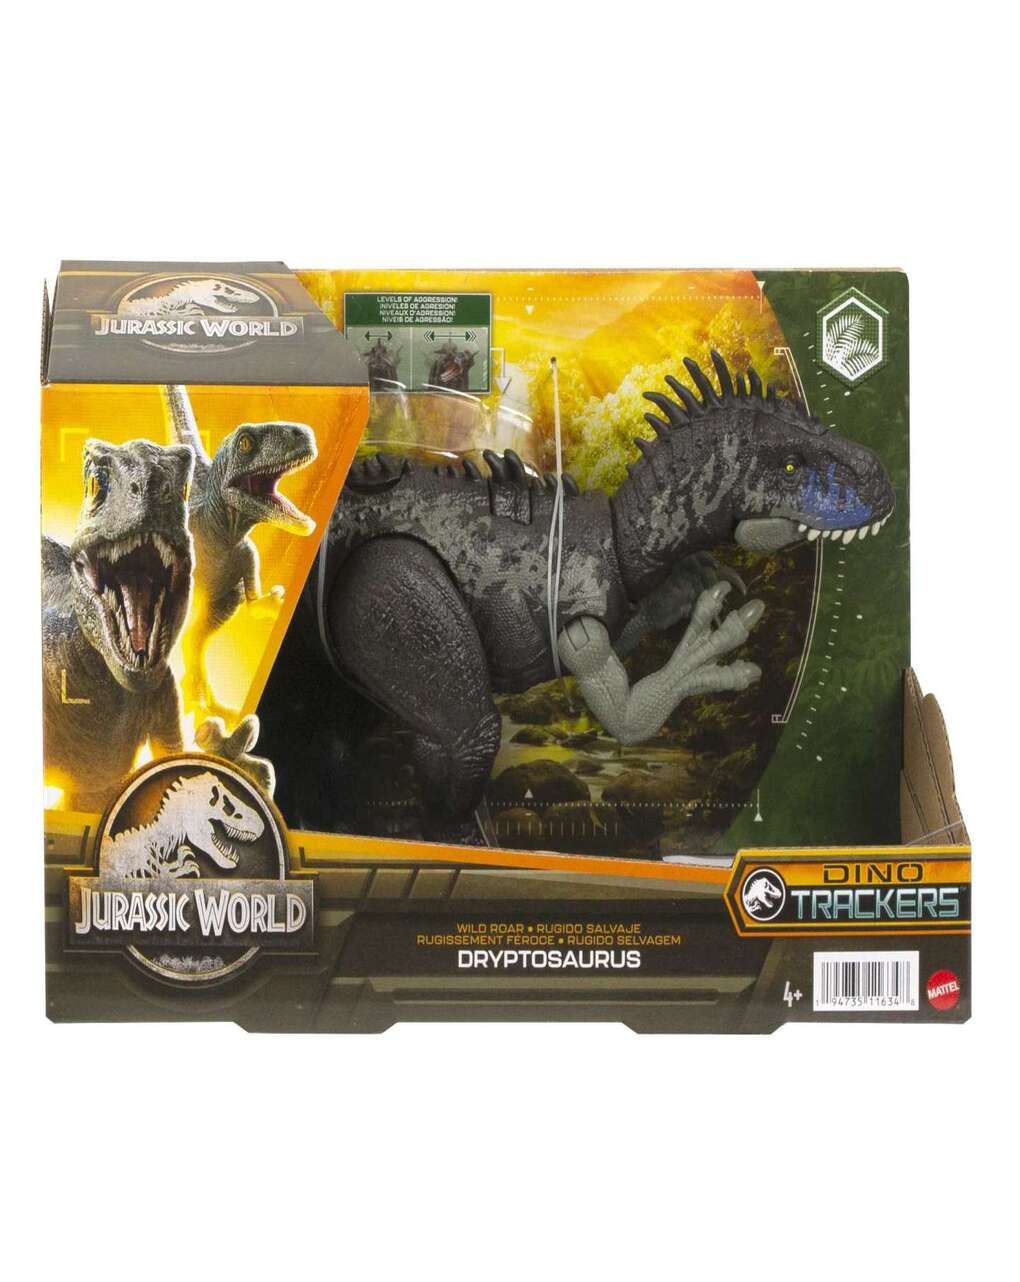 Jurassic world νέοι δεινόσαυροι με κινούμενα μέλη, λειτουργία επίθεσης & ήχους hlp14 - Jurassic World